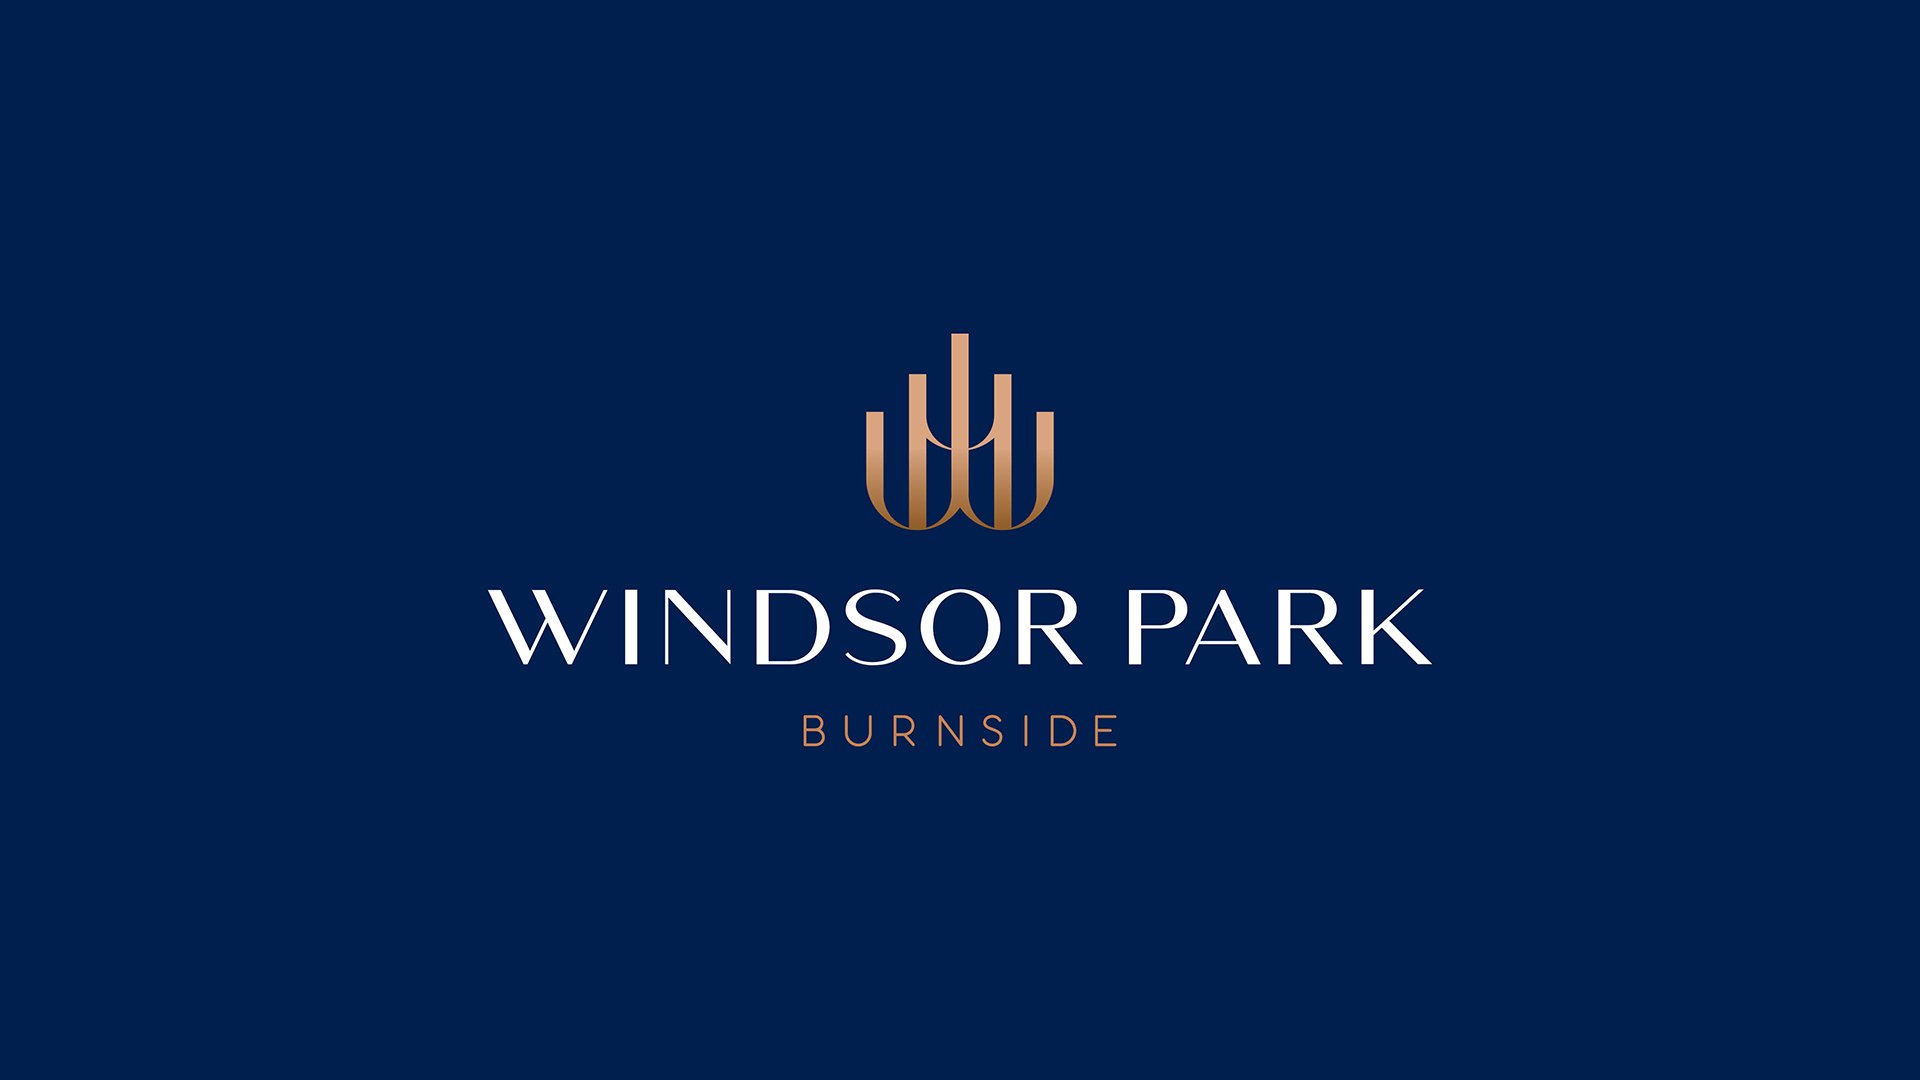 028-Ken-Guy-Buderim-Windsor-Park-Burnside-1920px.jpg